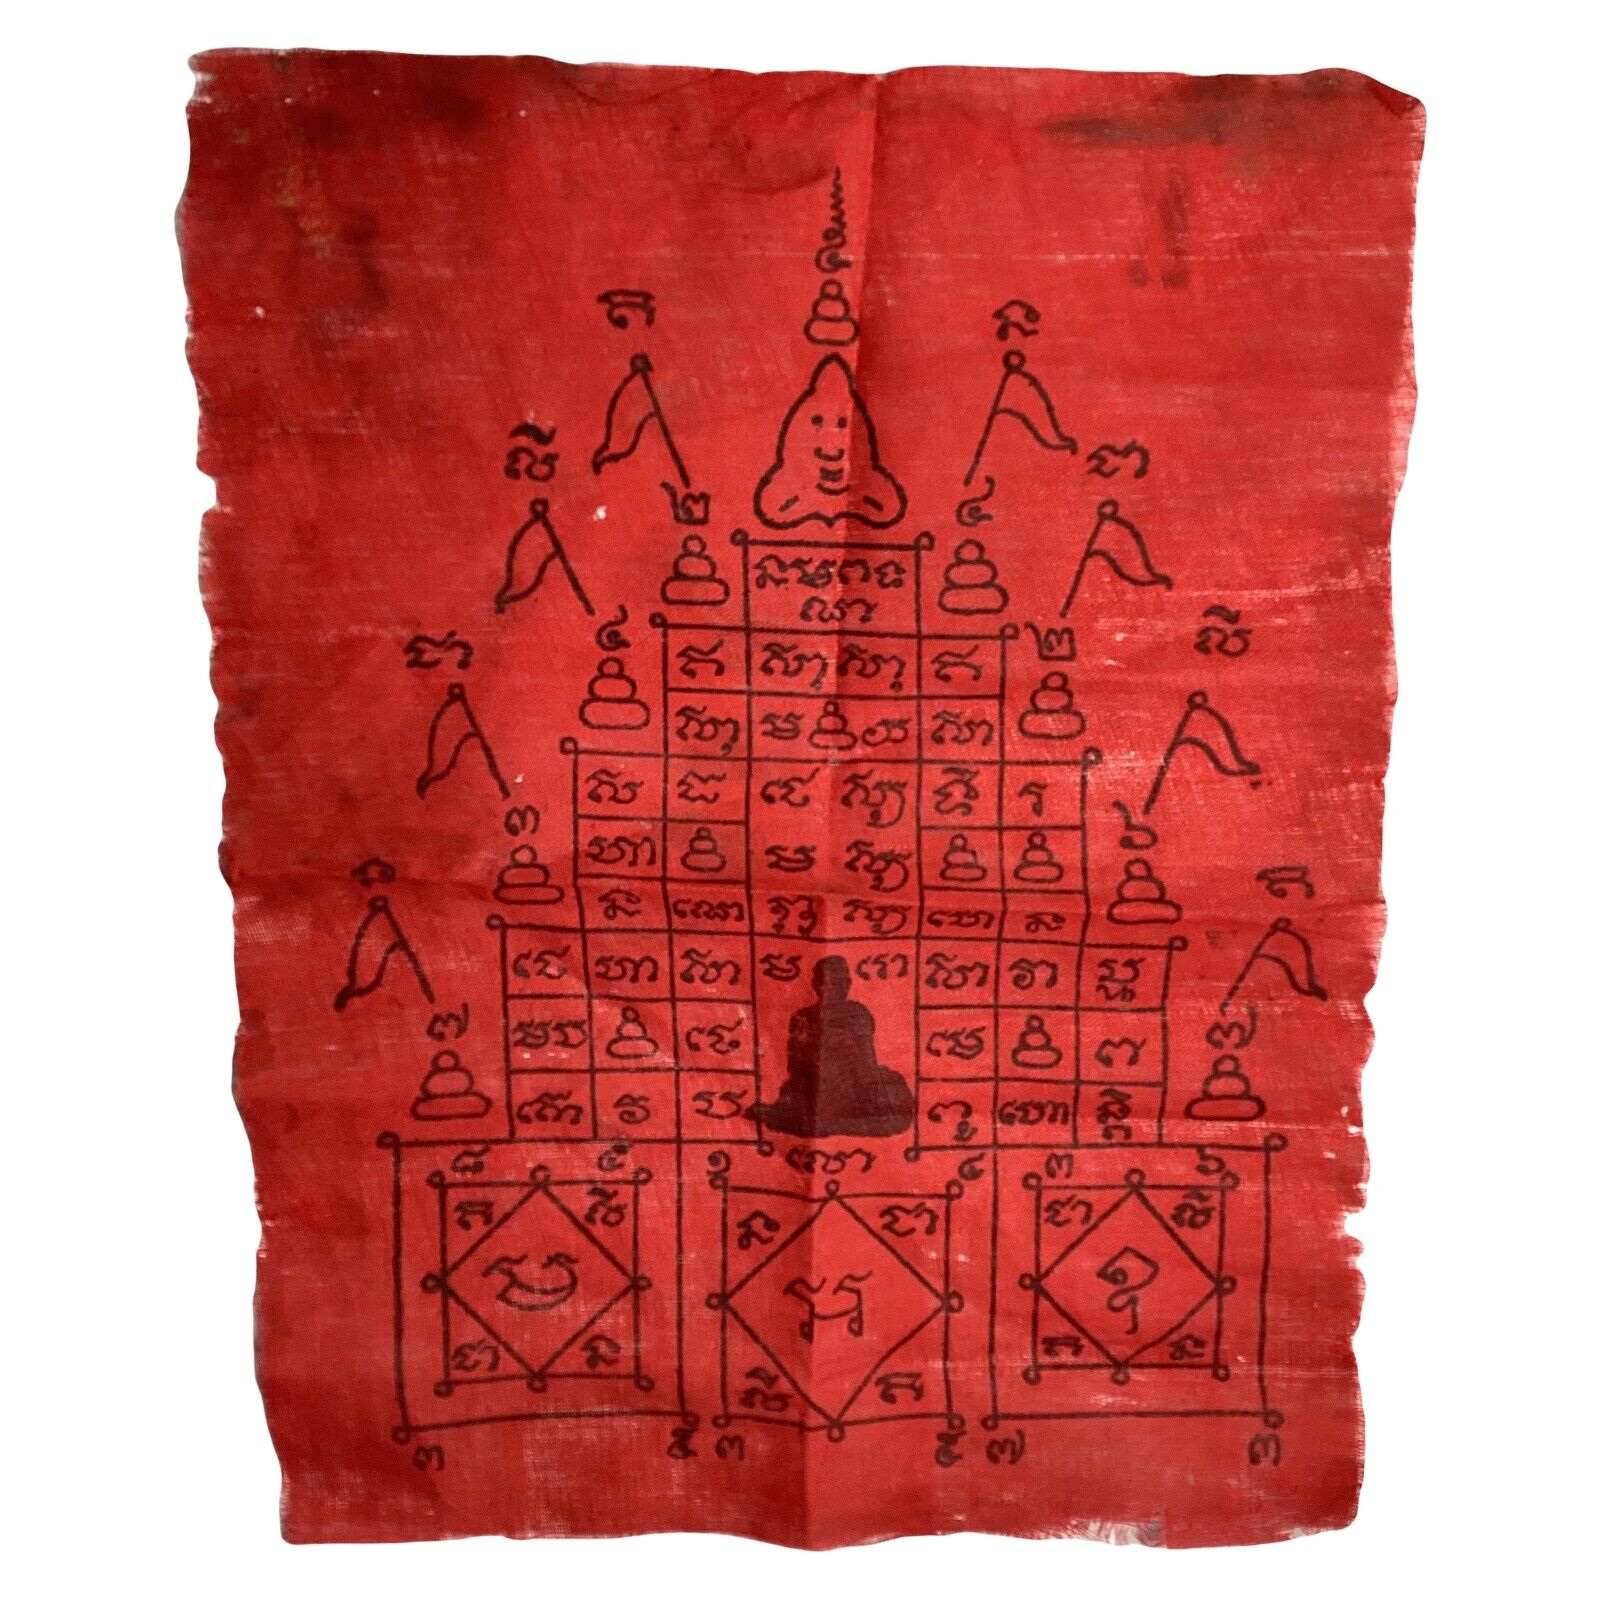 talisman cloth Thai northern charm amulet wall art decor